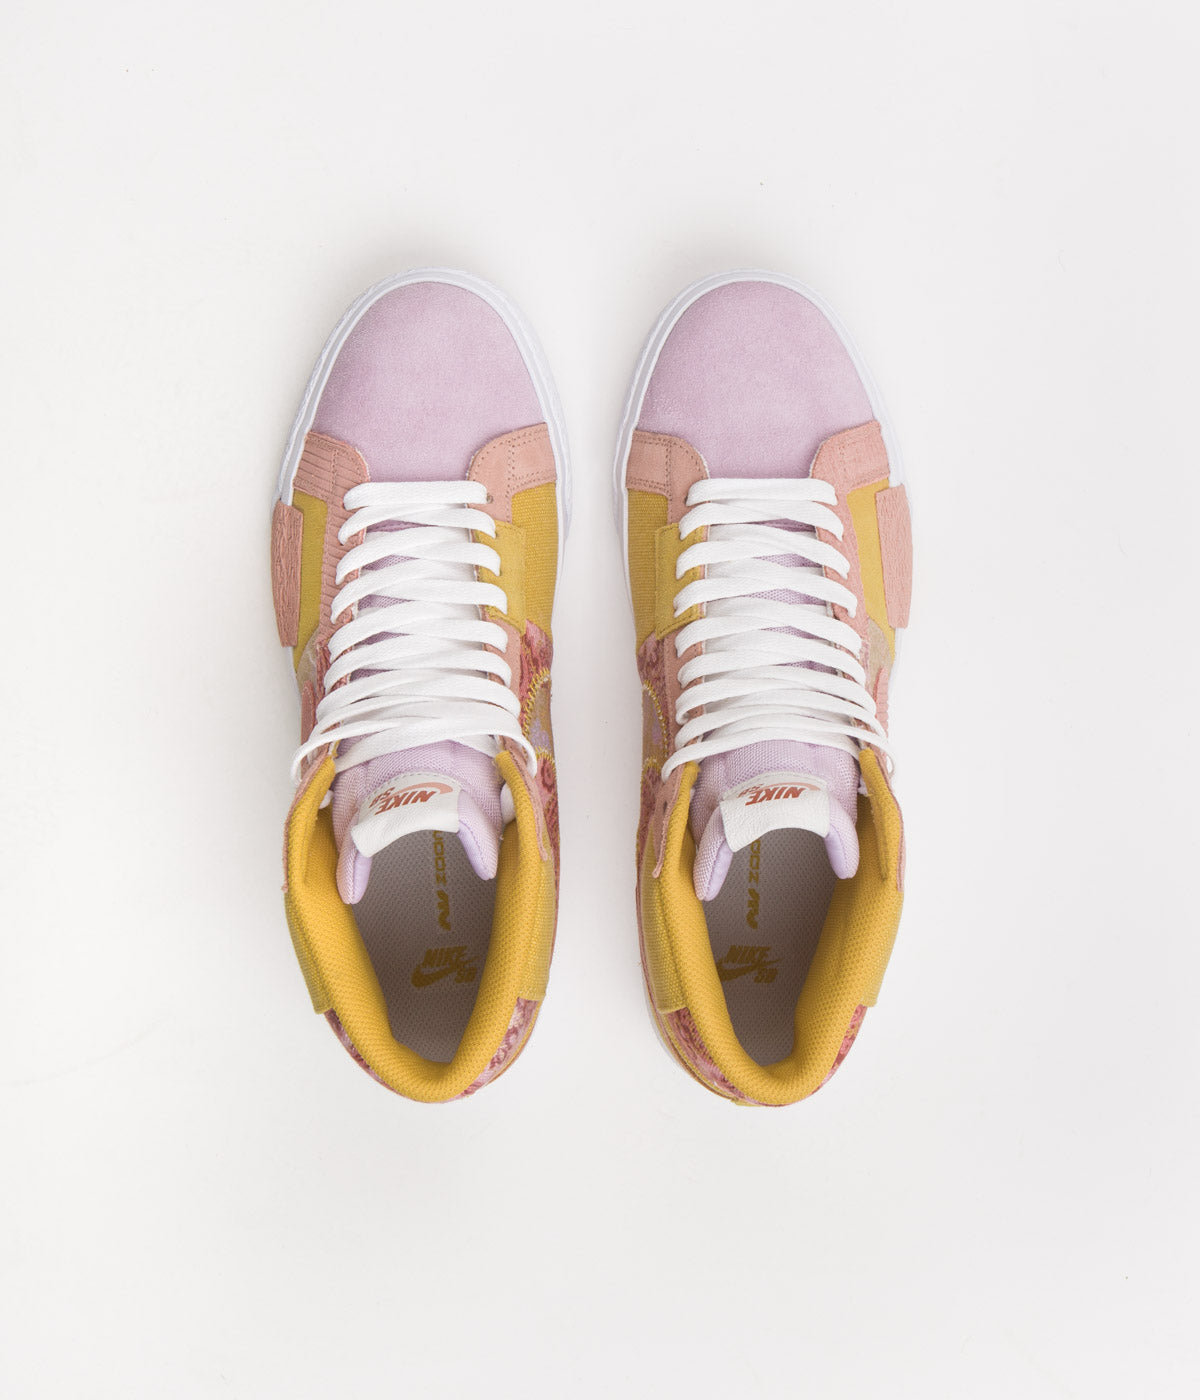 Mediar bandeja hielo nike 2009 lebron air max shoes china Mid Premium Shoes - womens nike grey  pink shoe store - Sanded Gold / White | Burnt Sunrise - FitforhealthShops